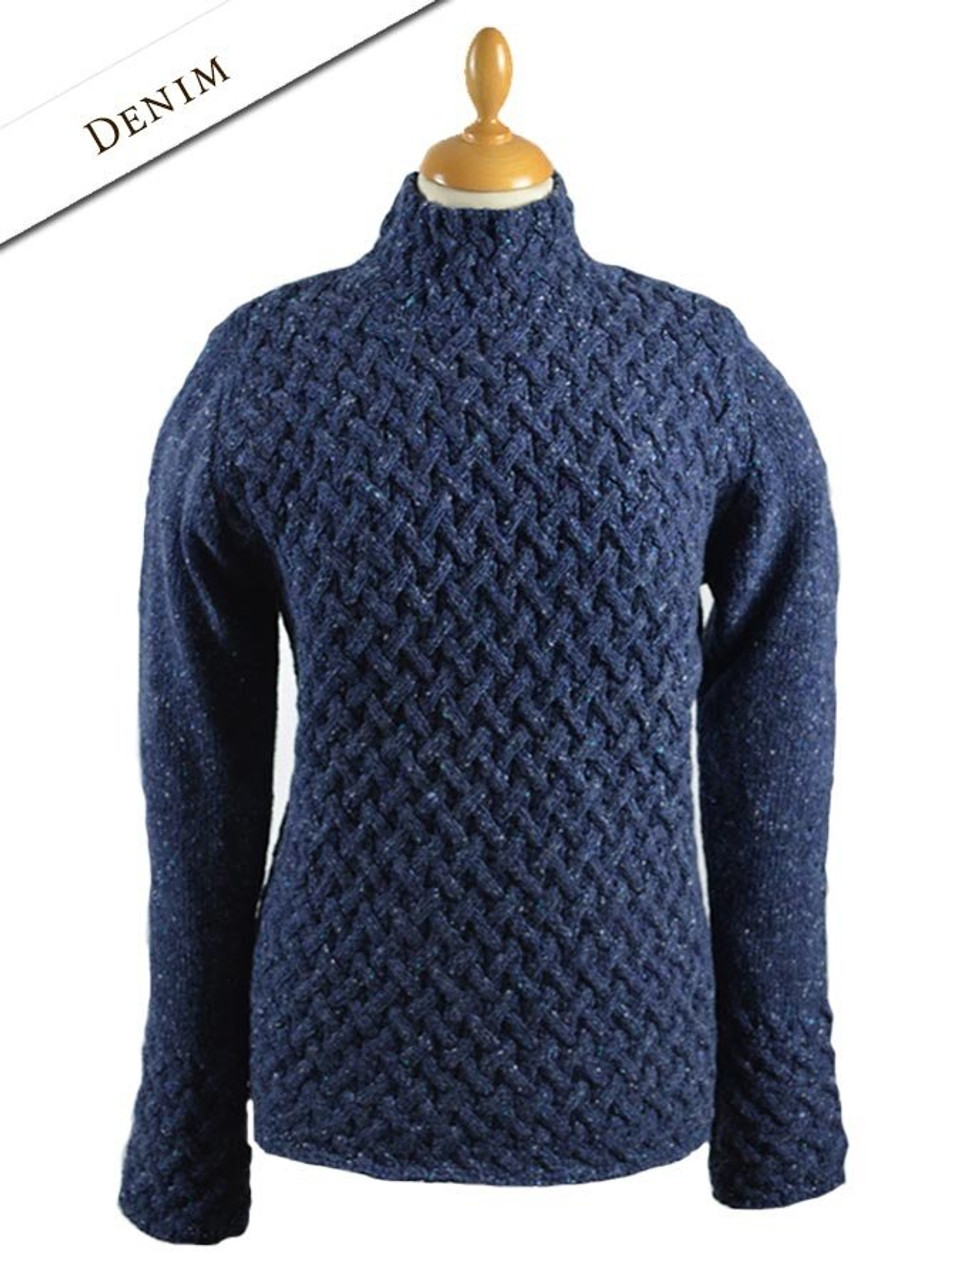 Wool Cashmere Aran Trellis Sweater, cable knit, Irish | Aran Sweater Market